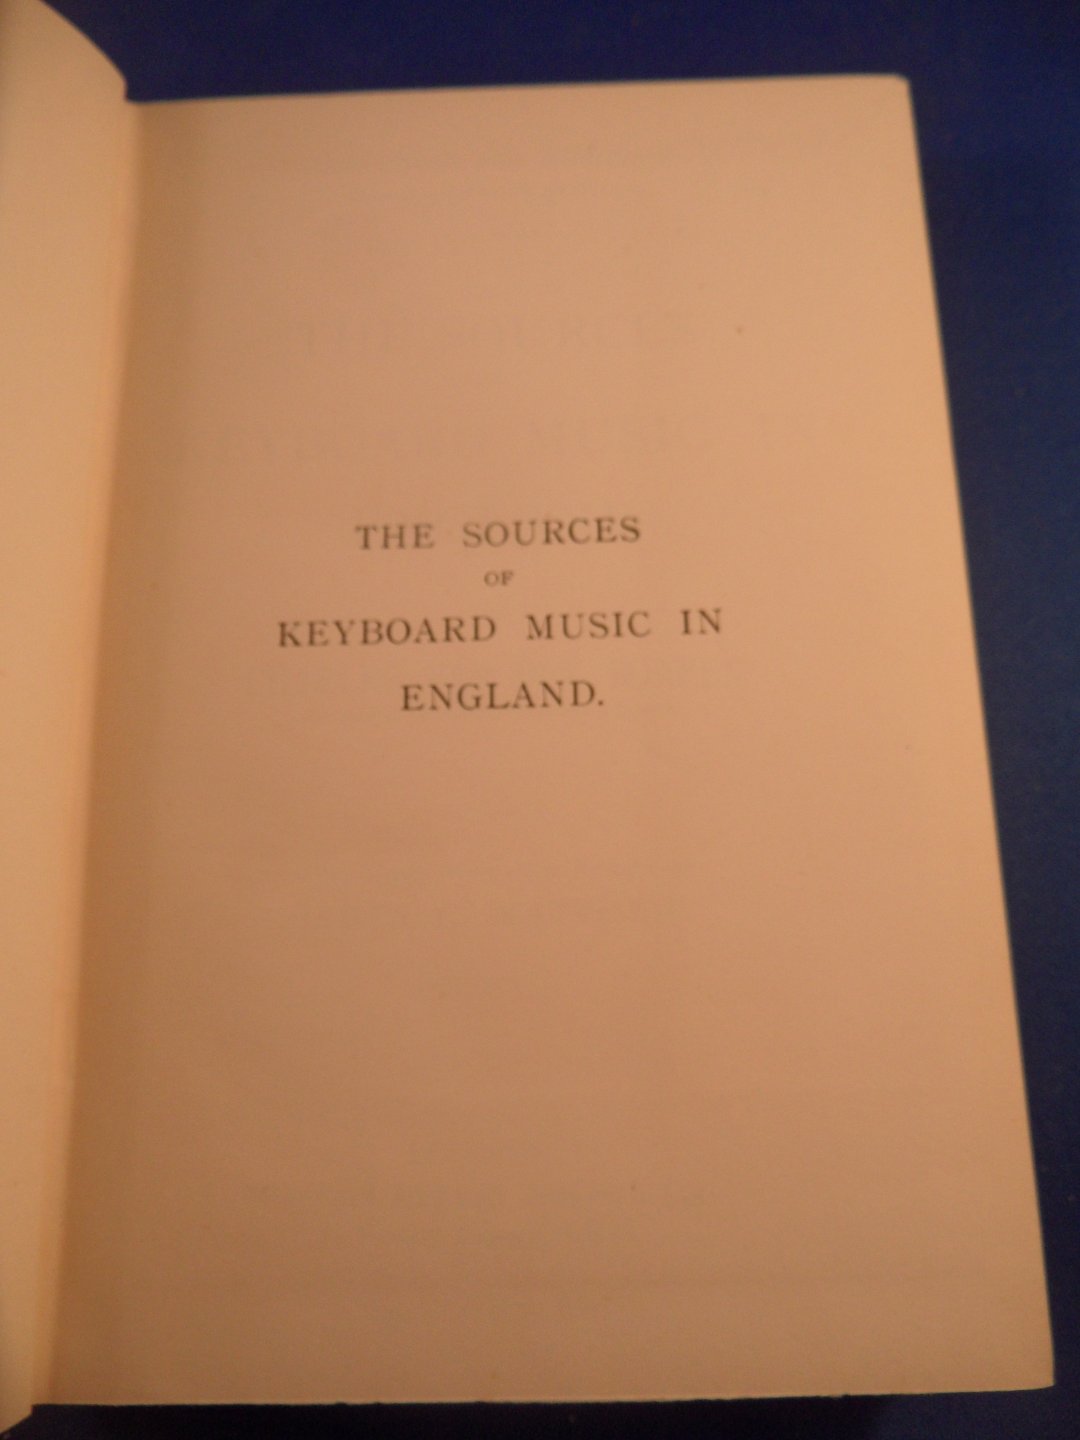 Borren, Charles van den - The sources of keyboard music in England